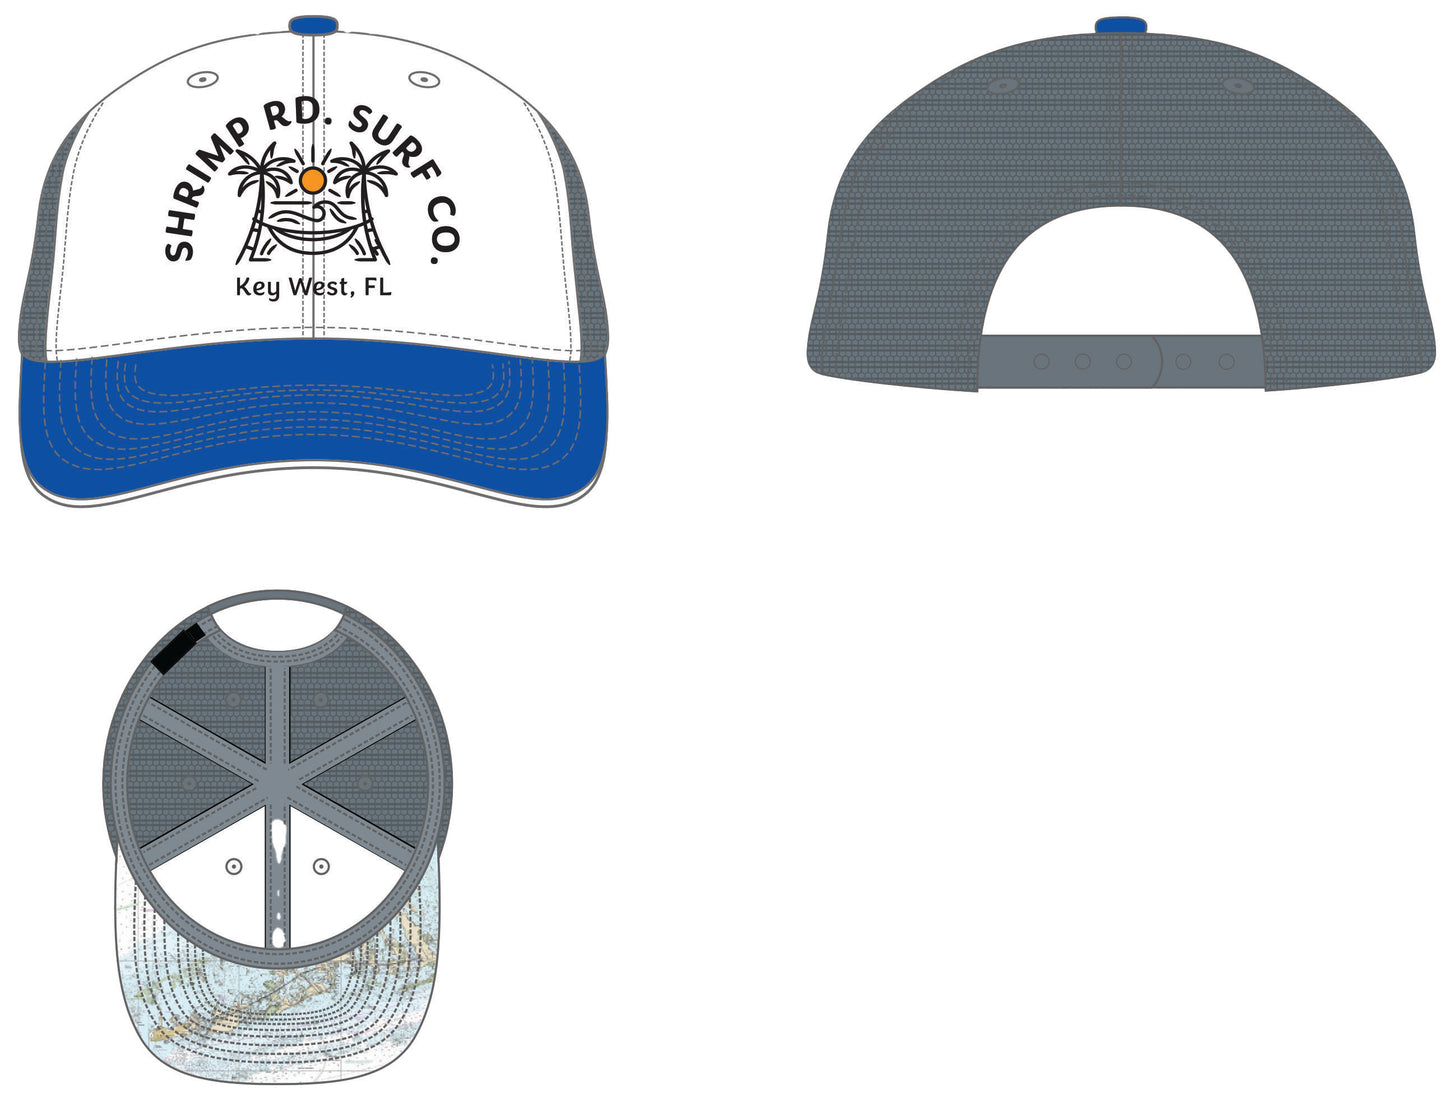 Shrimp Road Trucker Hat